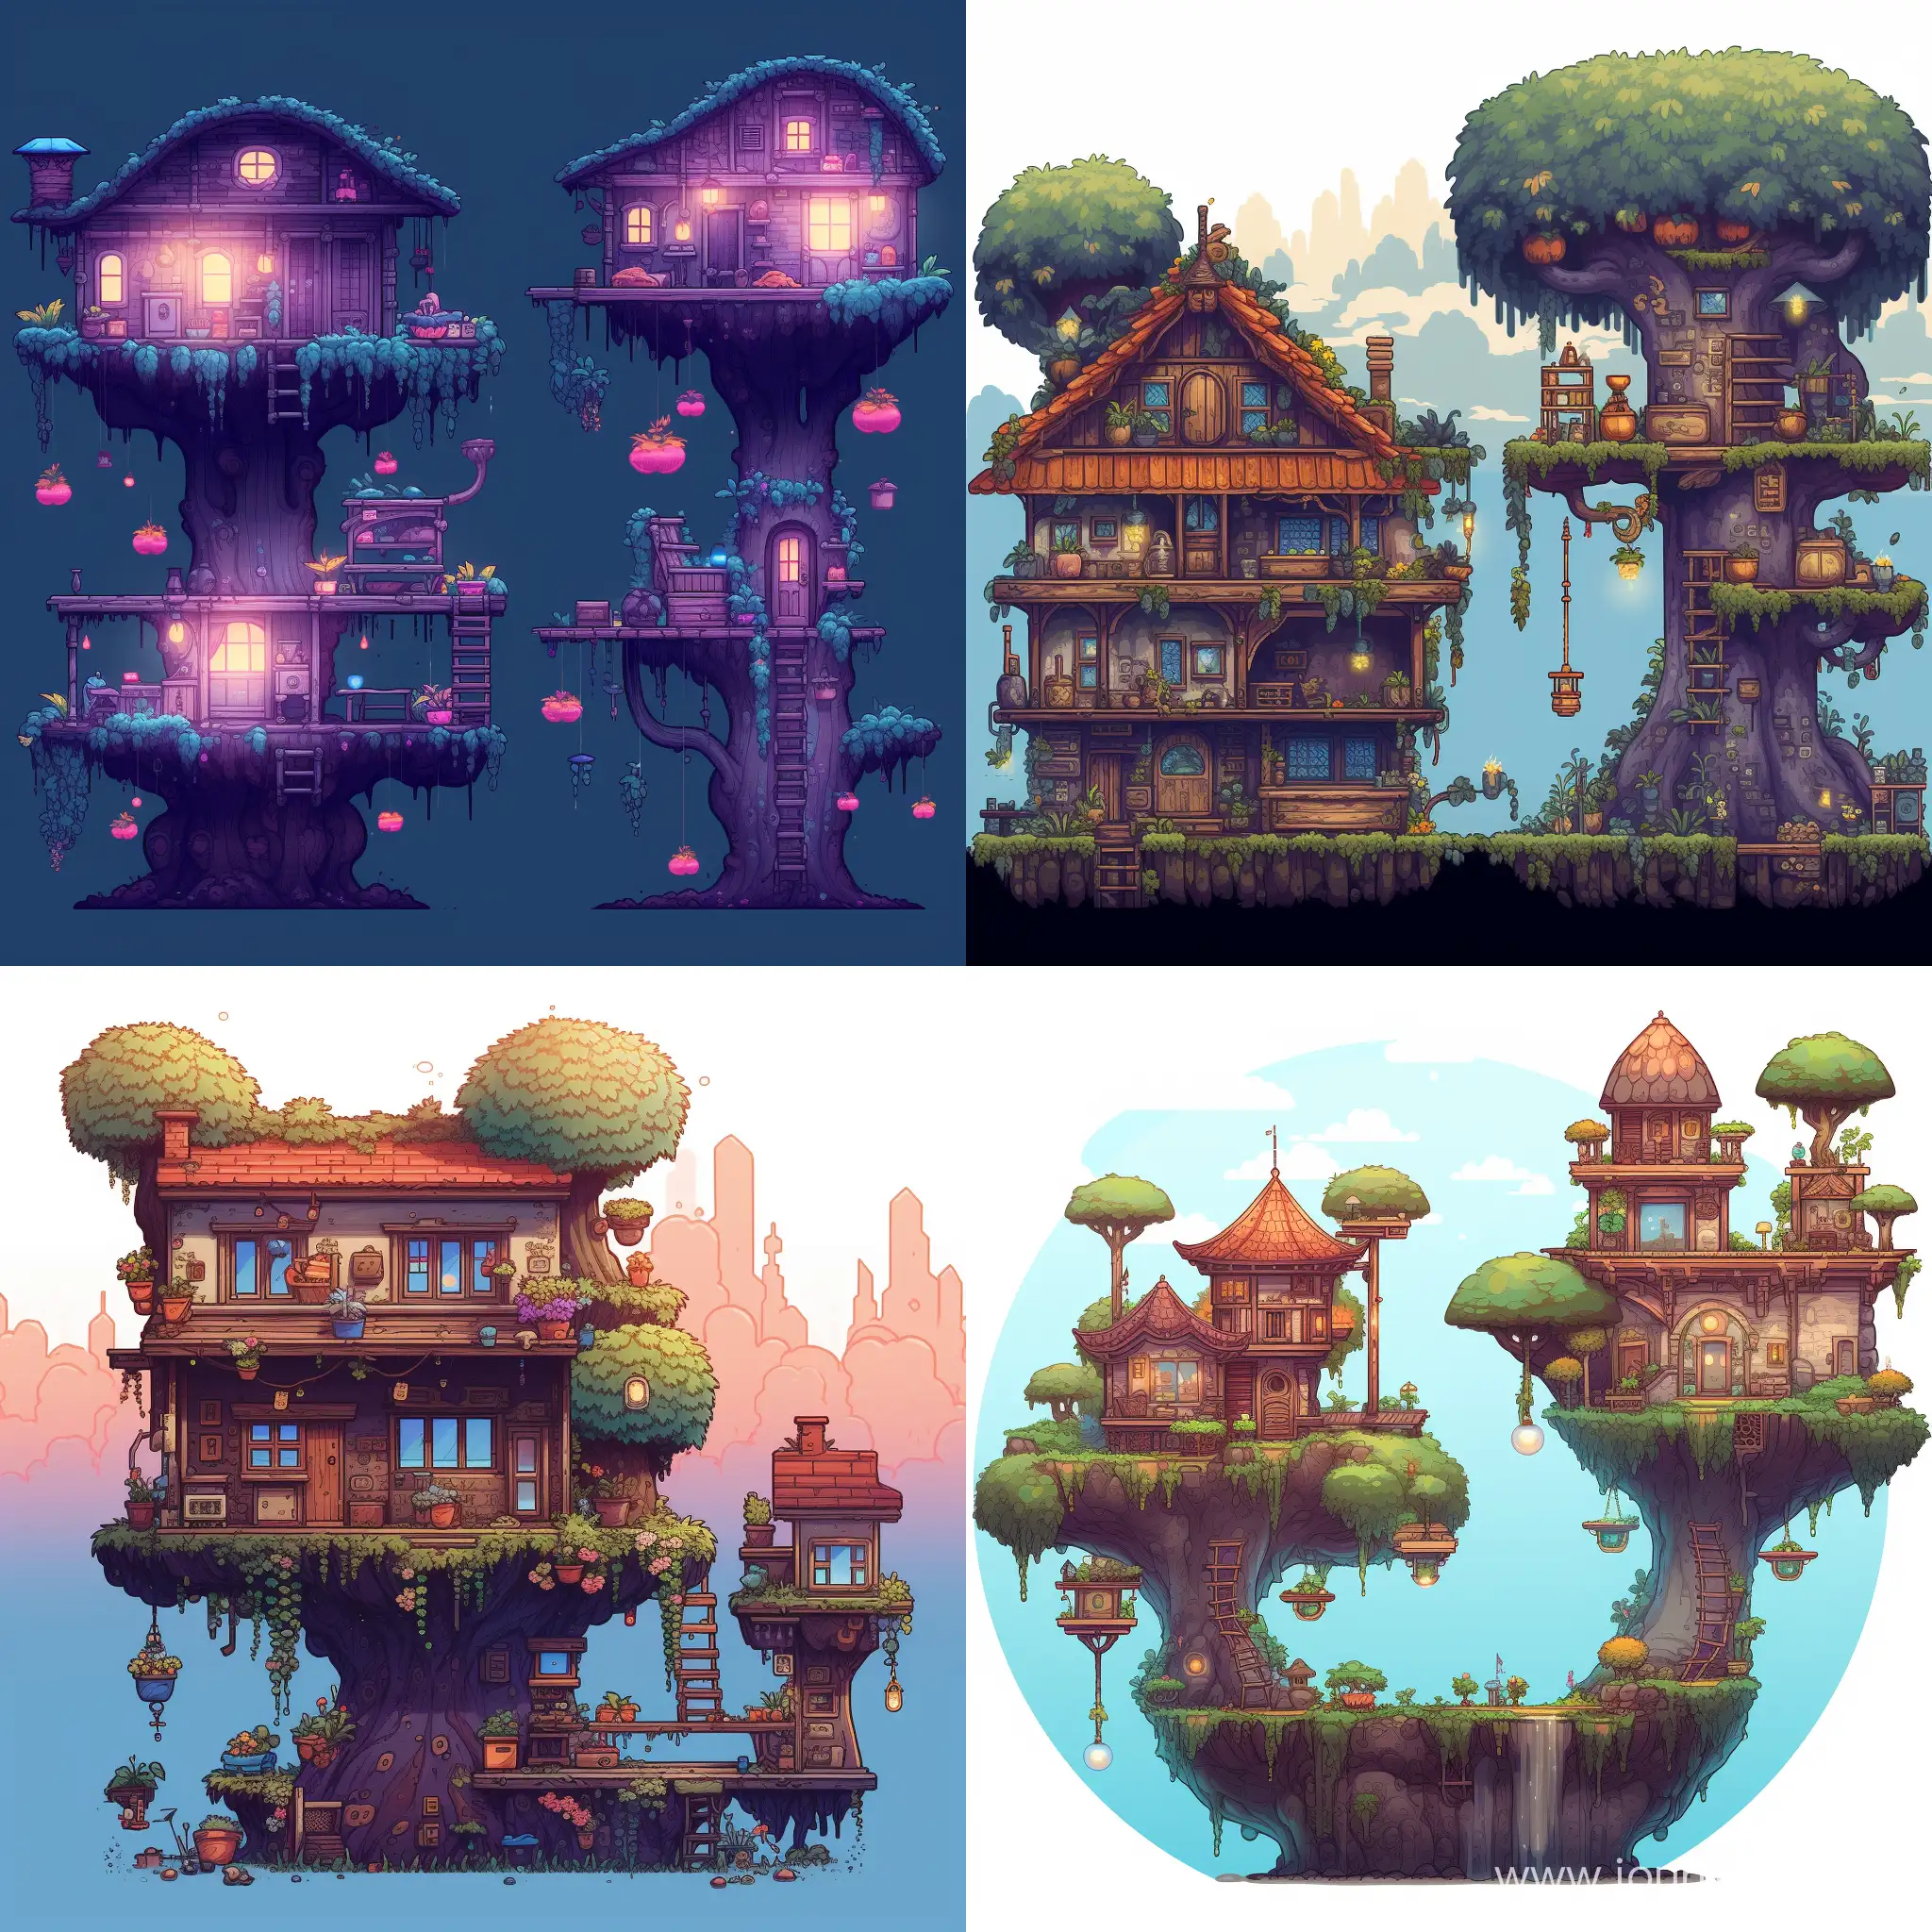 pixelart mockup of a fairy odd pair of homes